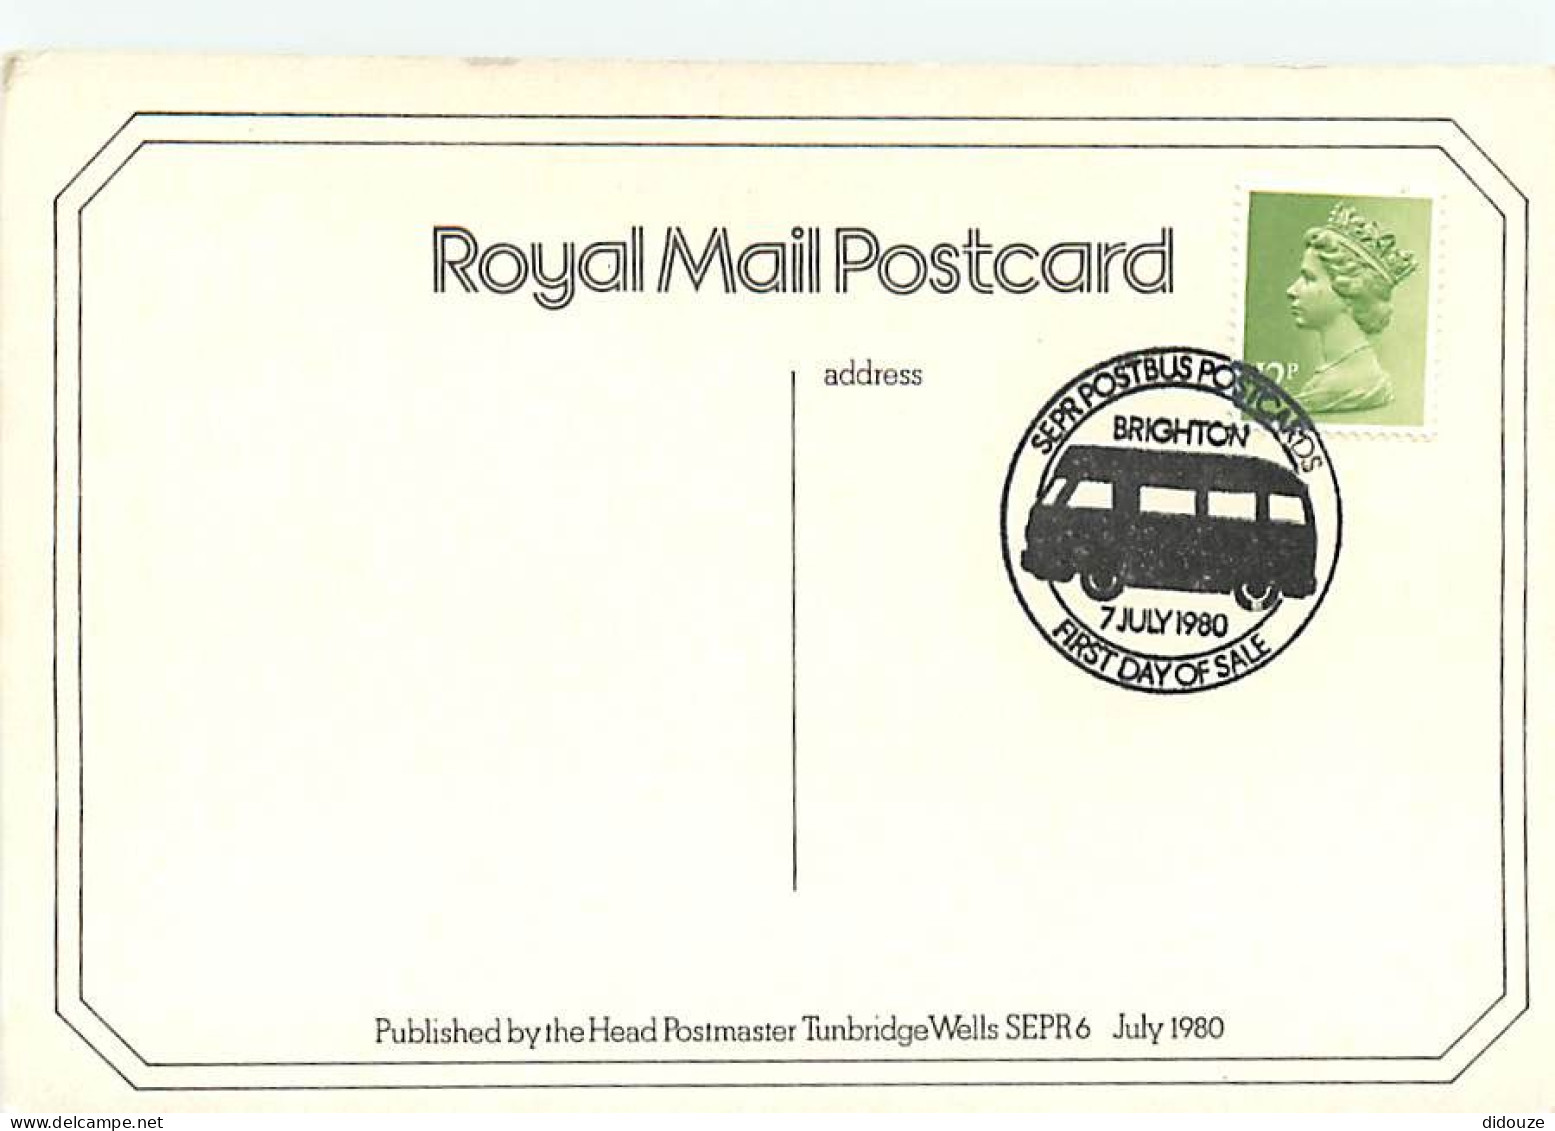 Automobiles - Royaume-Uni - The Tunbridge Wells - Mayfield Royal Mail Postbus - Mayfield High Street - SEPR Postbus Post - Passenger Cars